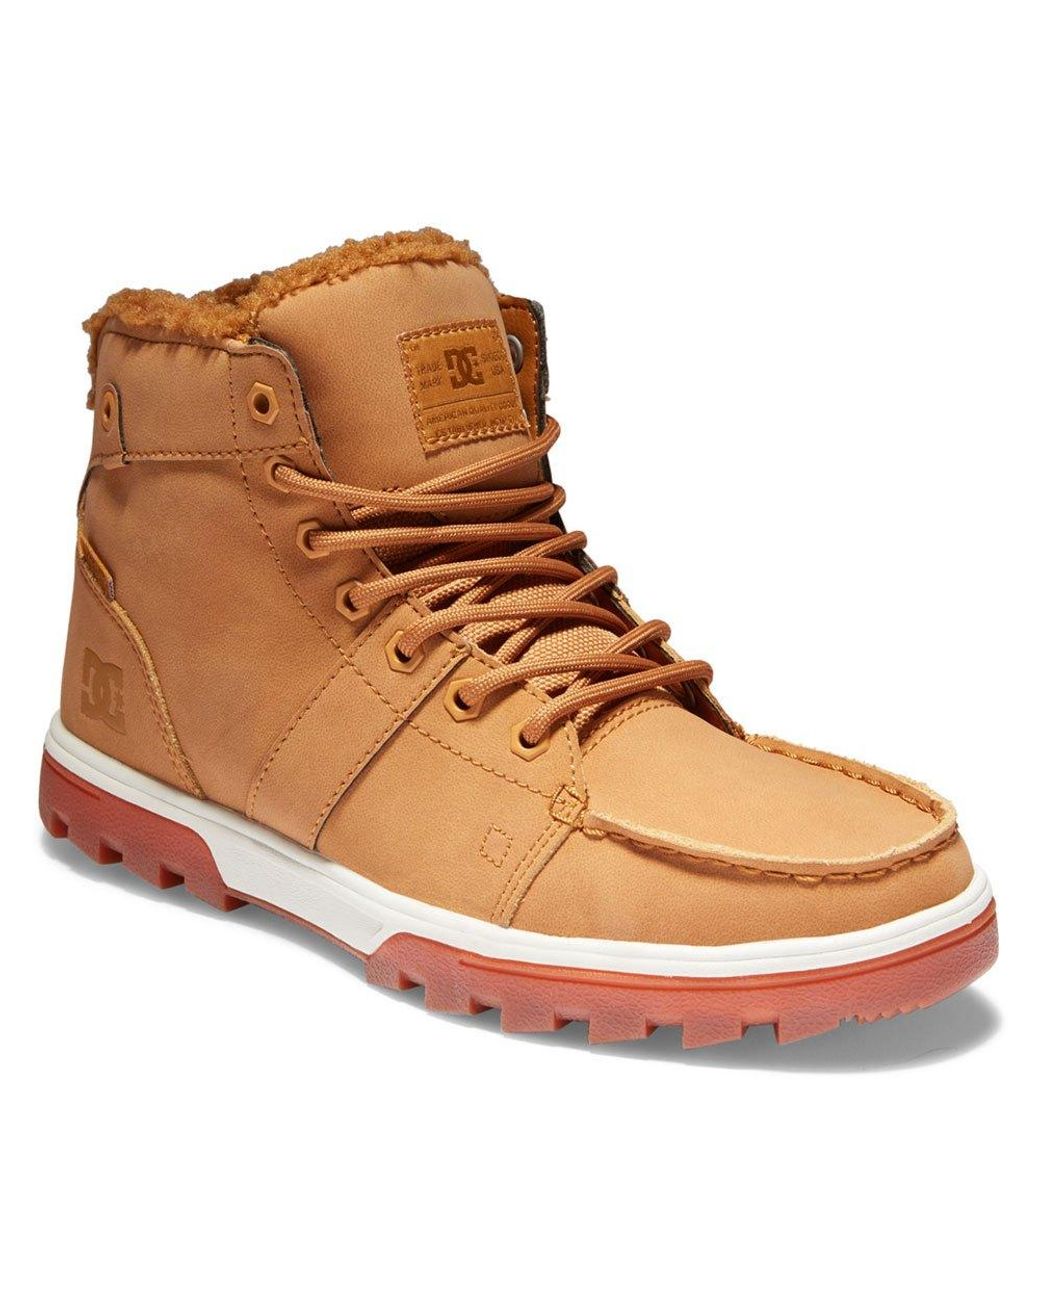 Buy Woodland Men's Snaype Nubuck Leather Boots (GB 2920118)-7 UK/India (41  EU) at Amazon.in